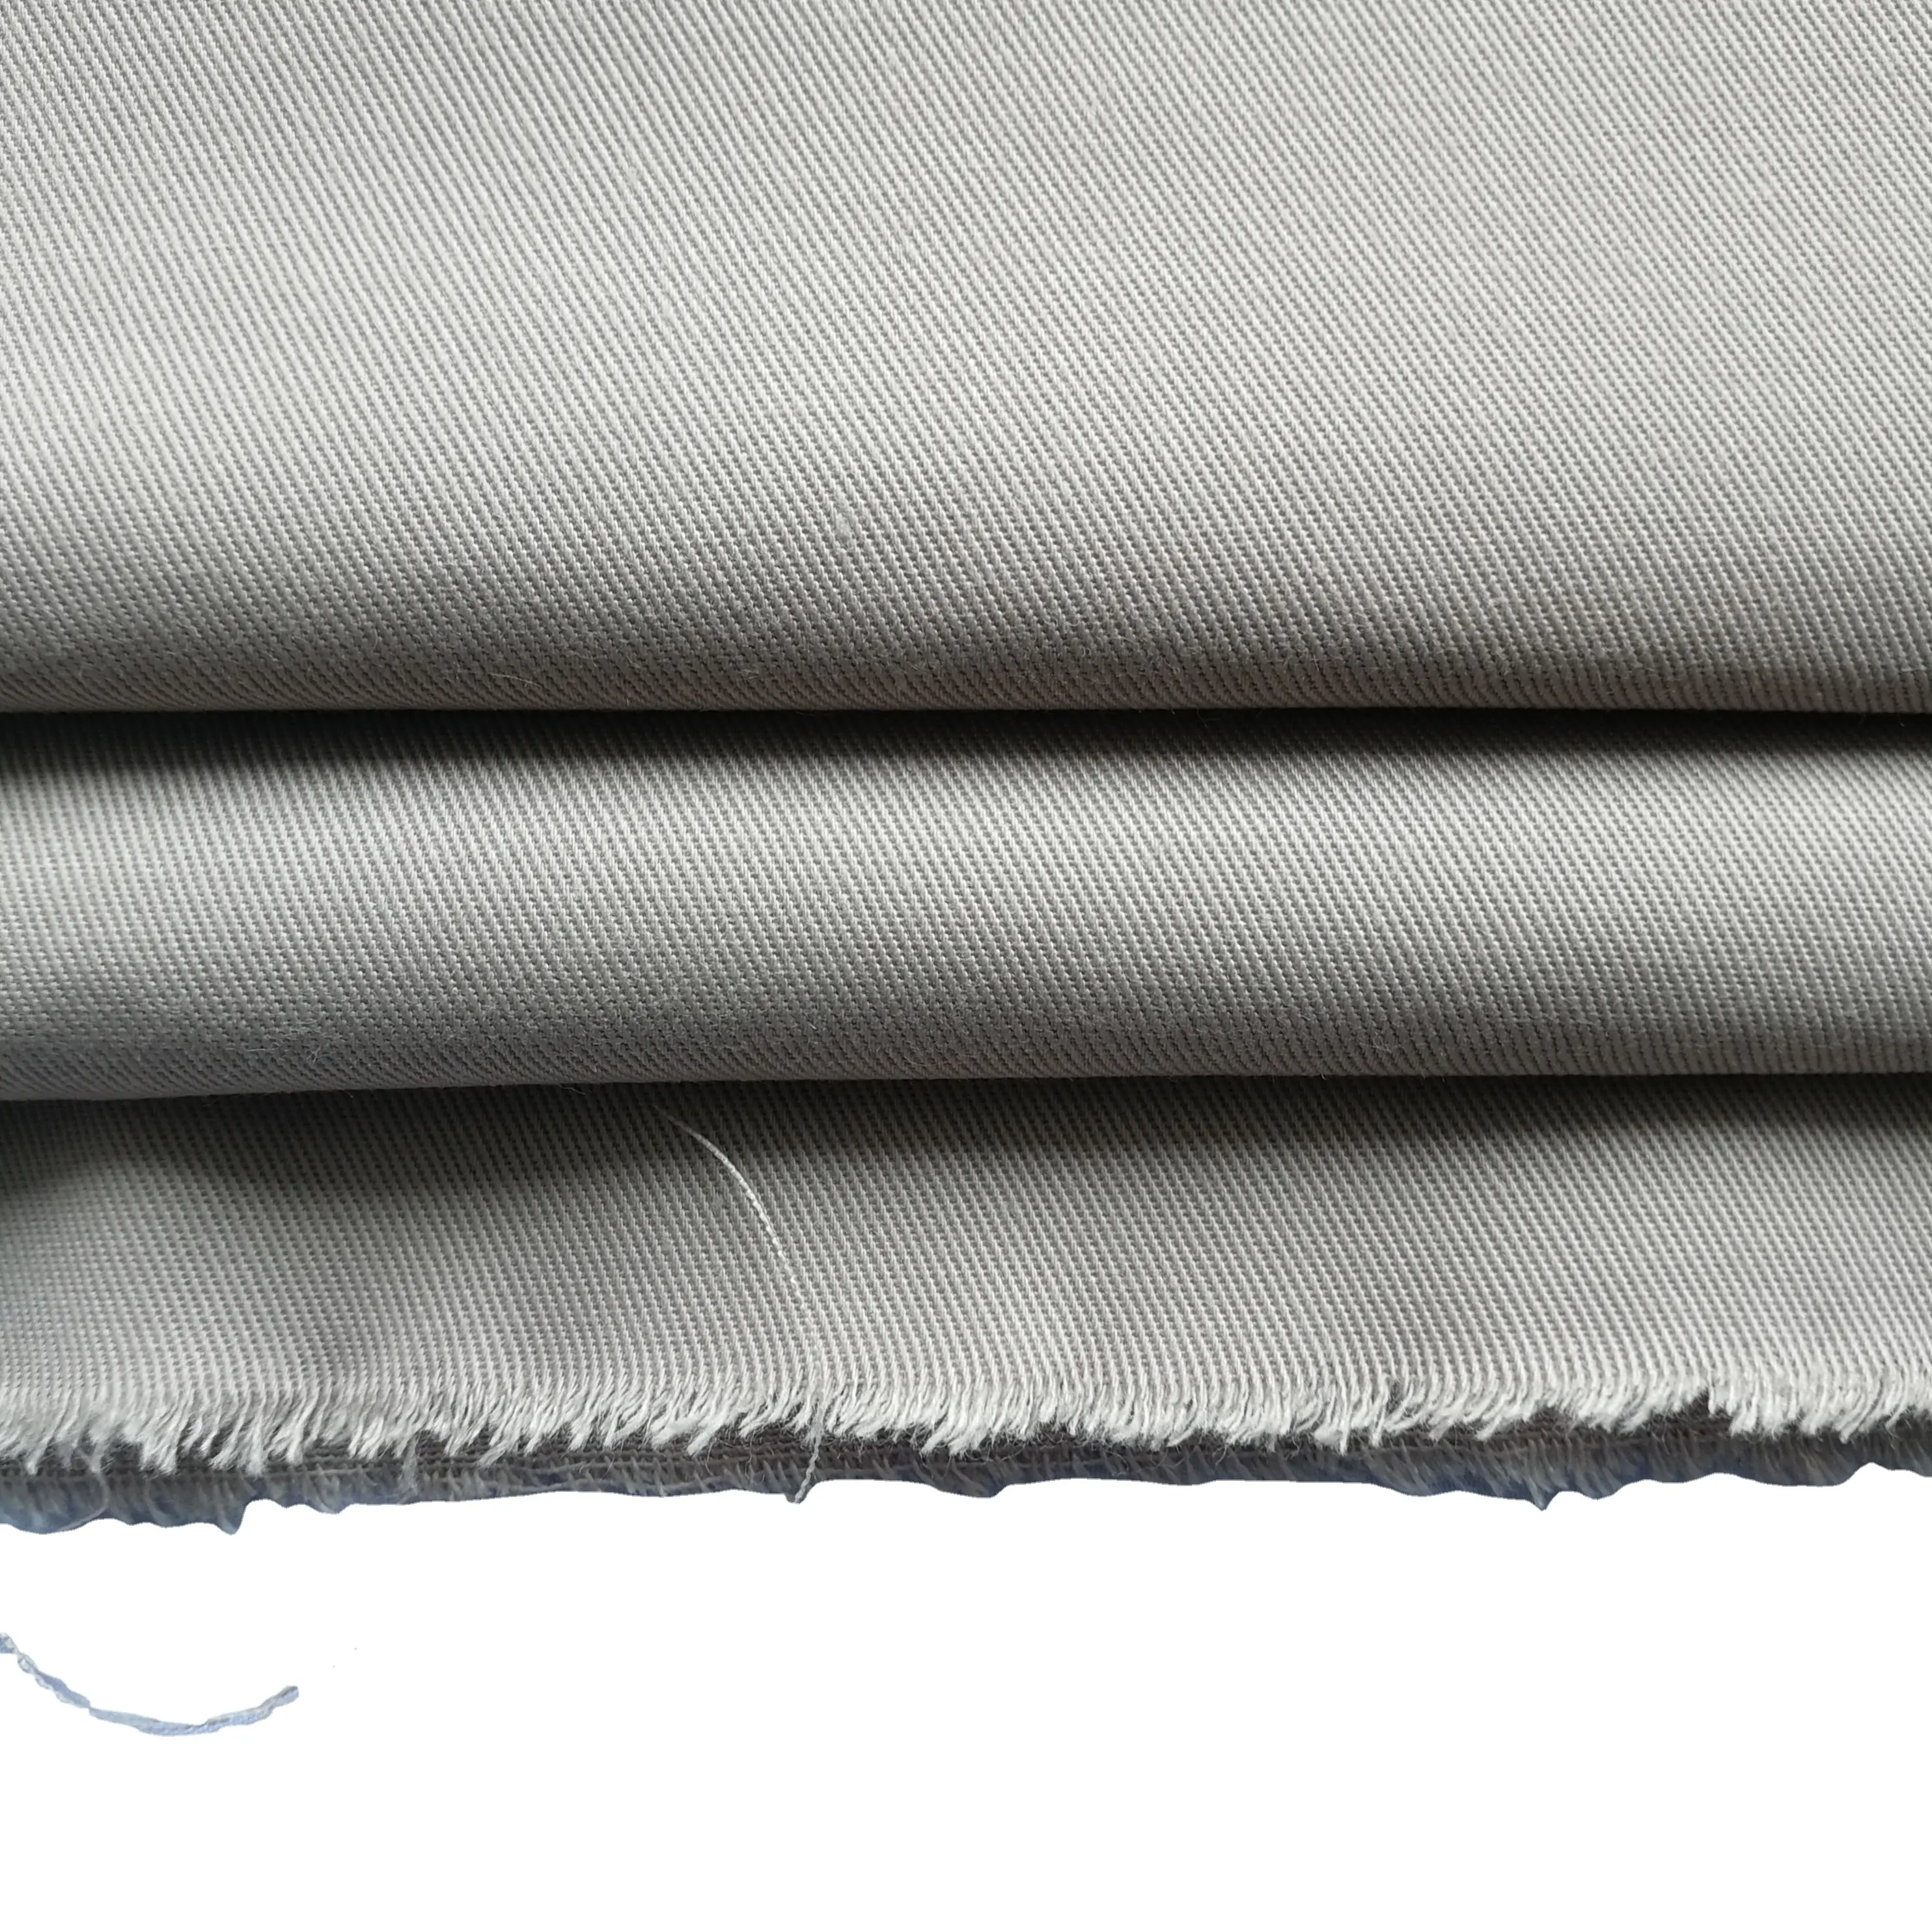 Offre Spéciale moins cher 65% Polyester/35% coton 3/1twill totling veste tissu